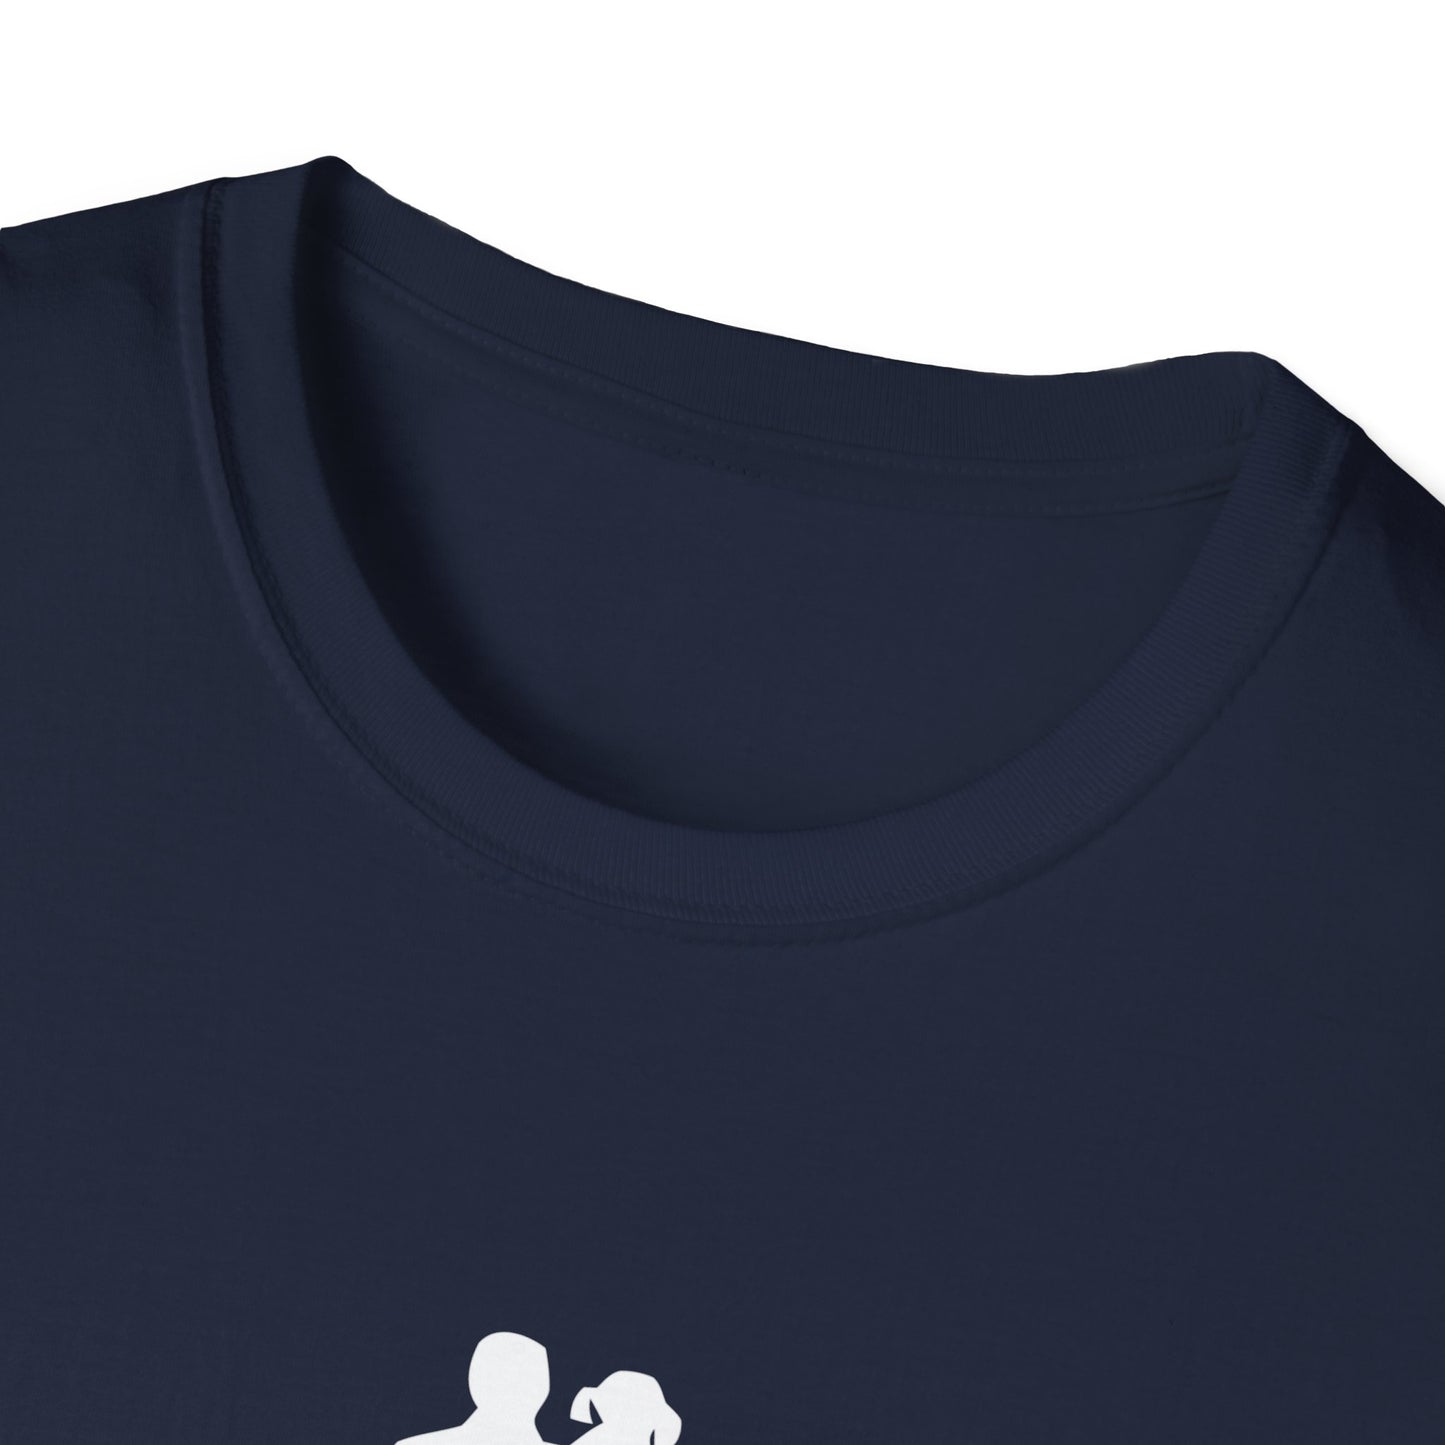 The Walking Dad Unisex Softstyle T-Shirt